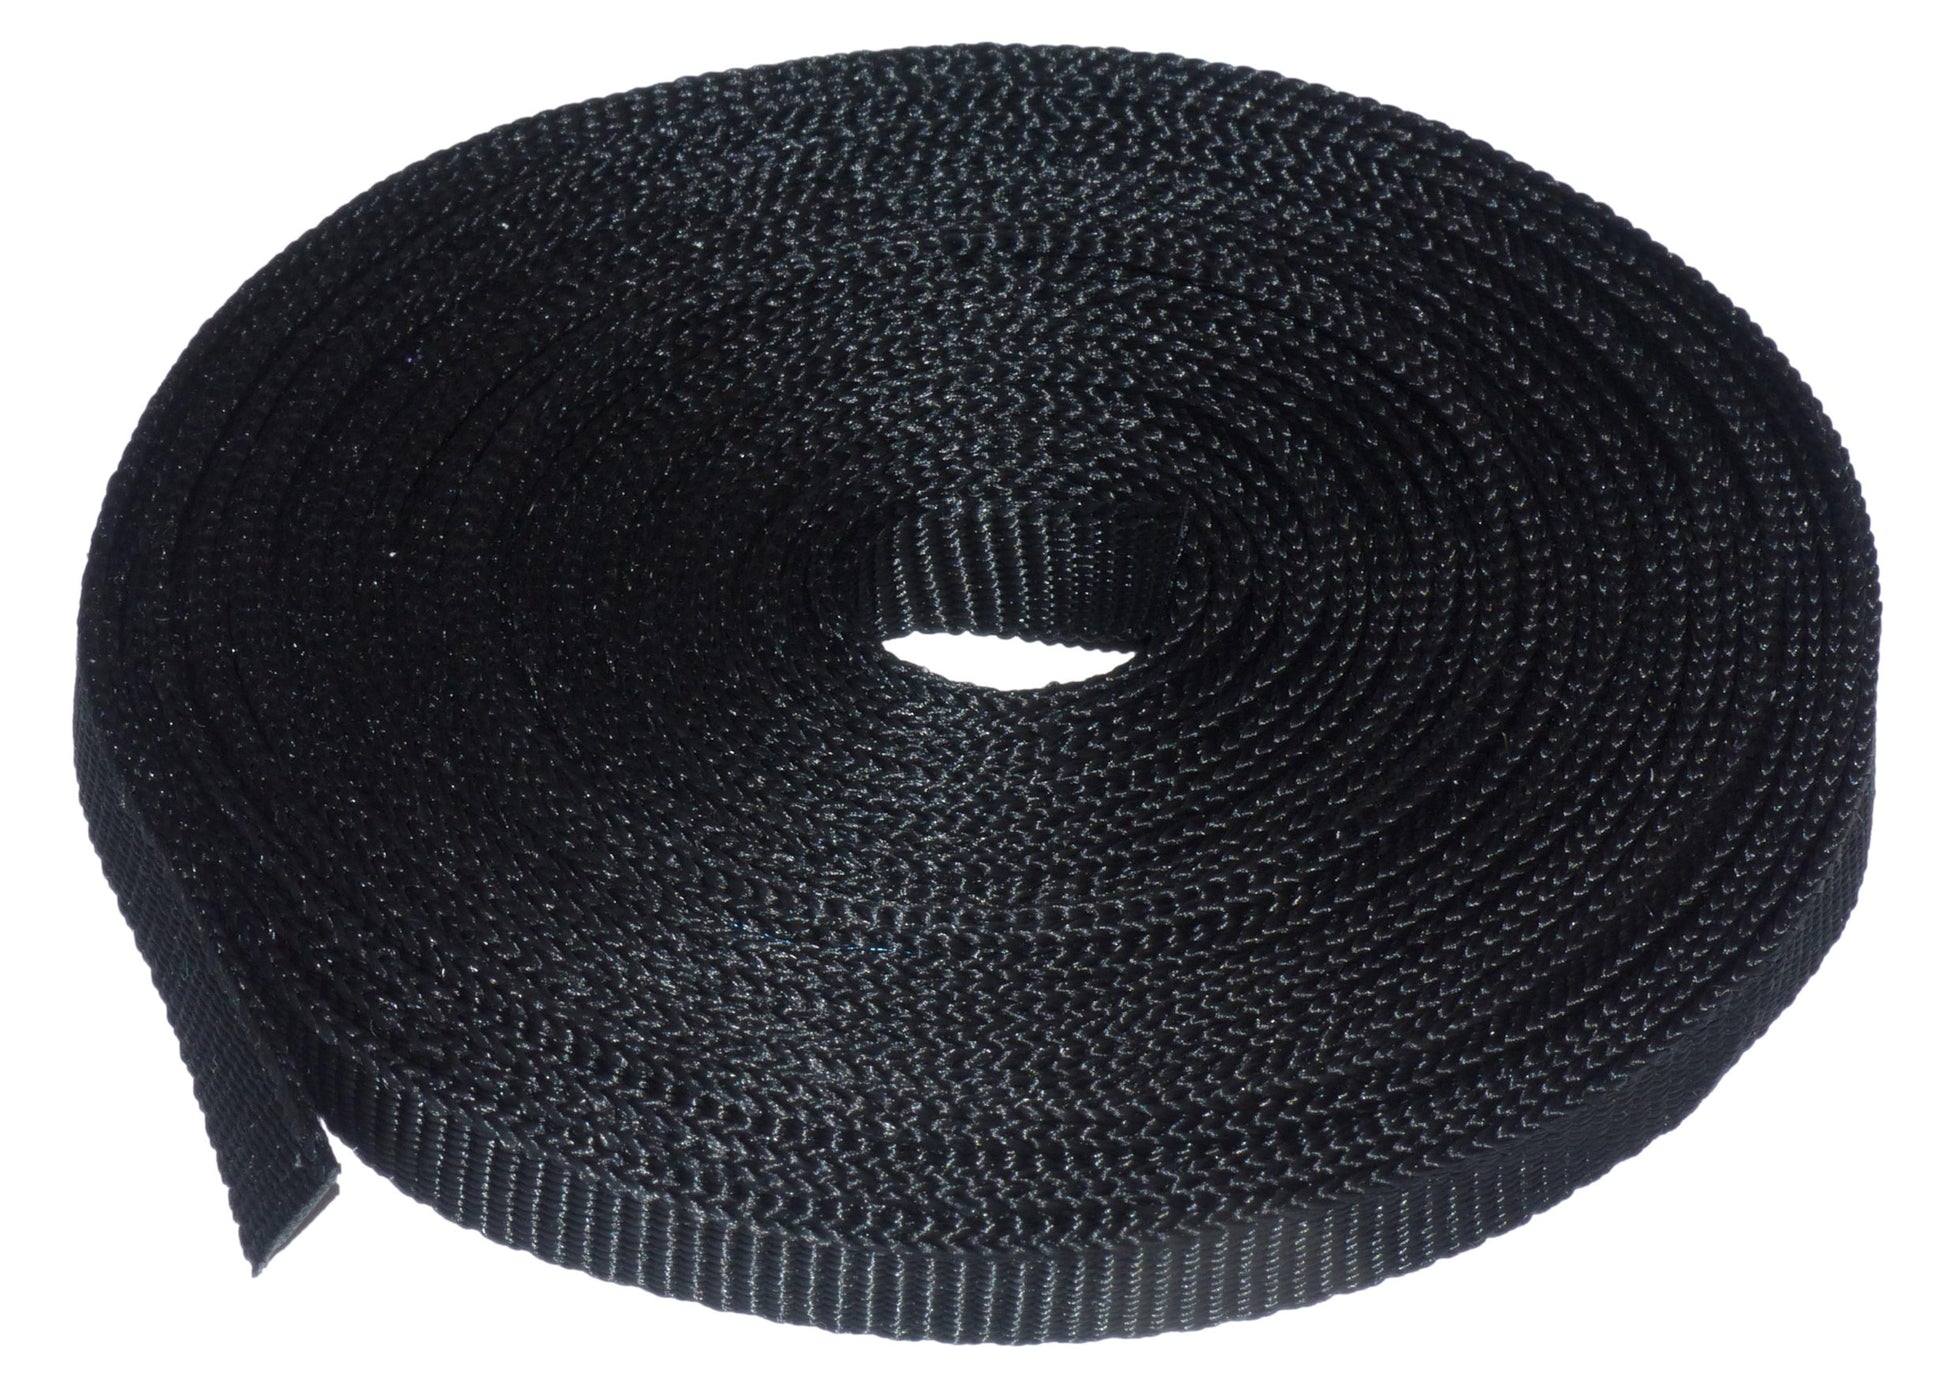 Benristraps 9mm Polypropylene Webbing in Black (10 metre roll)